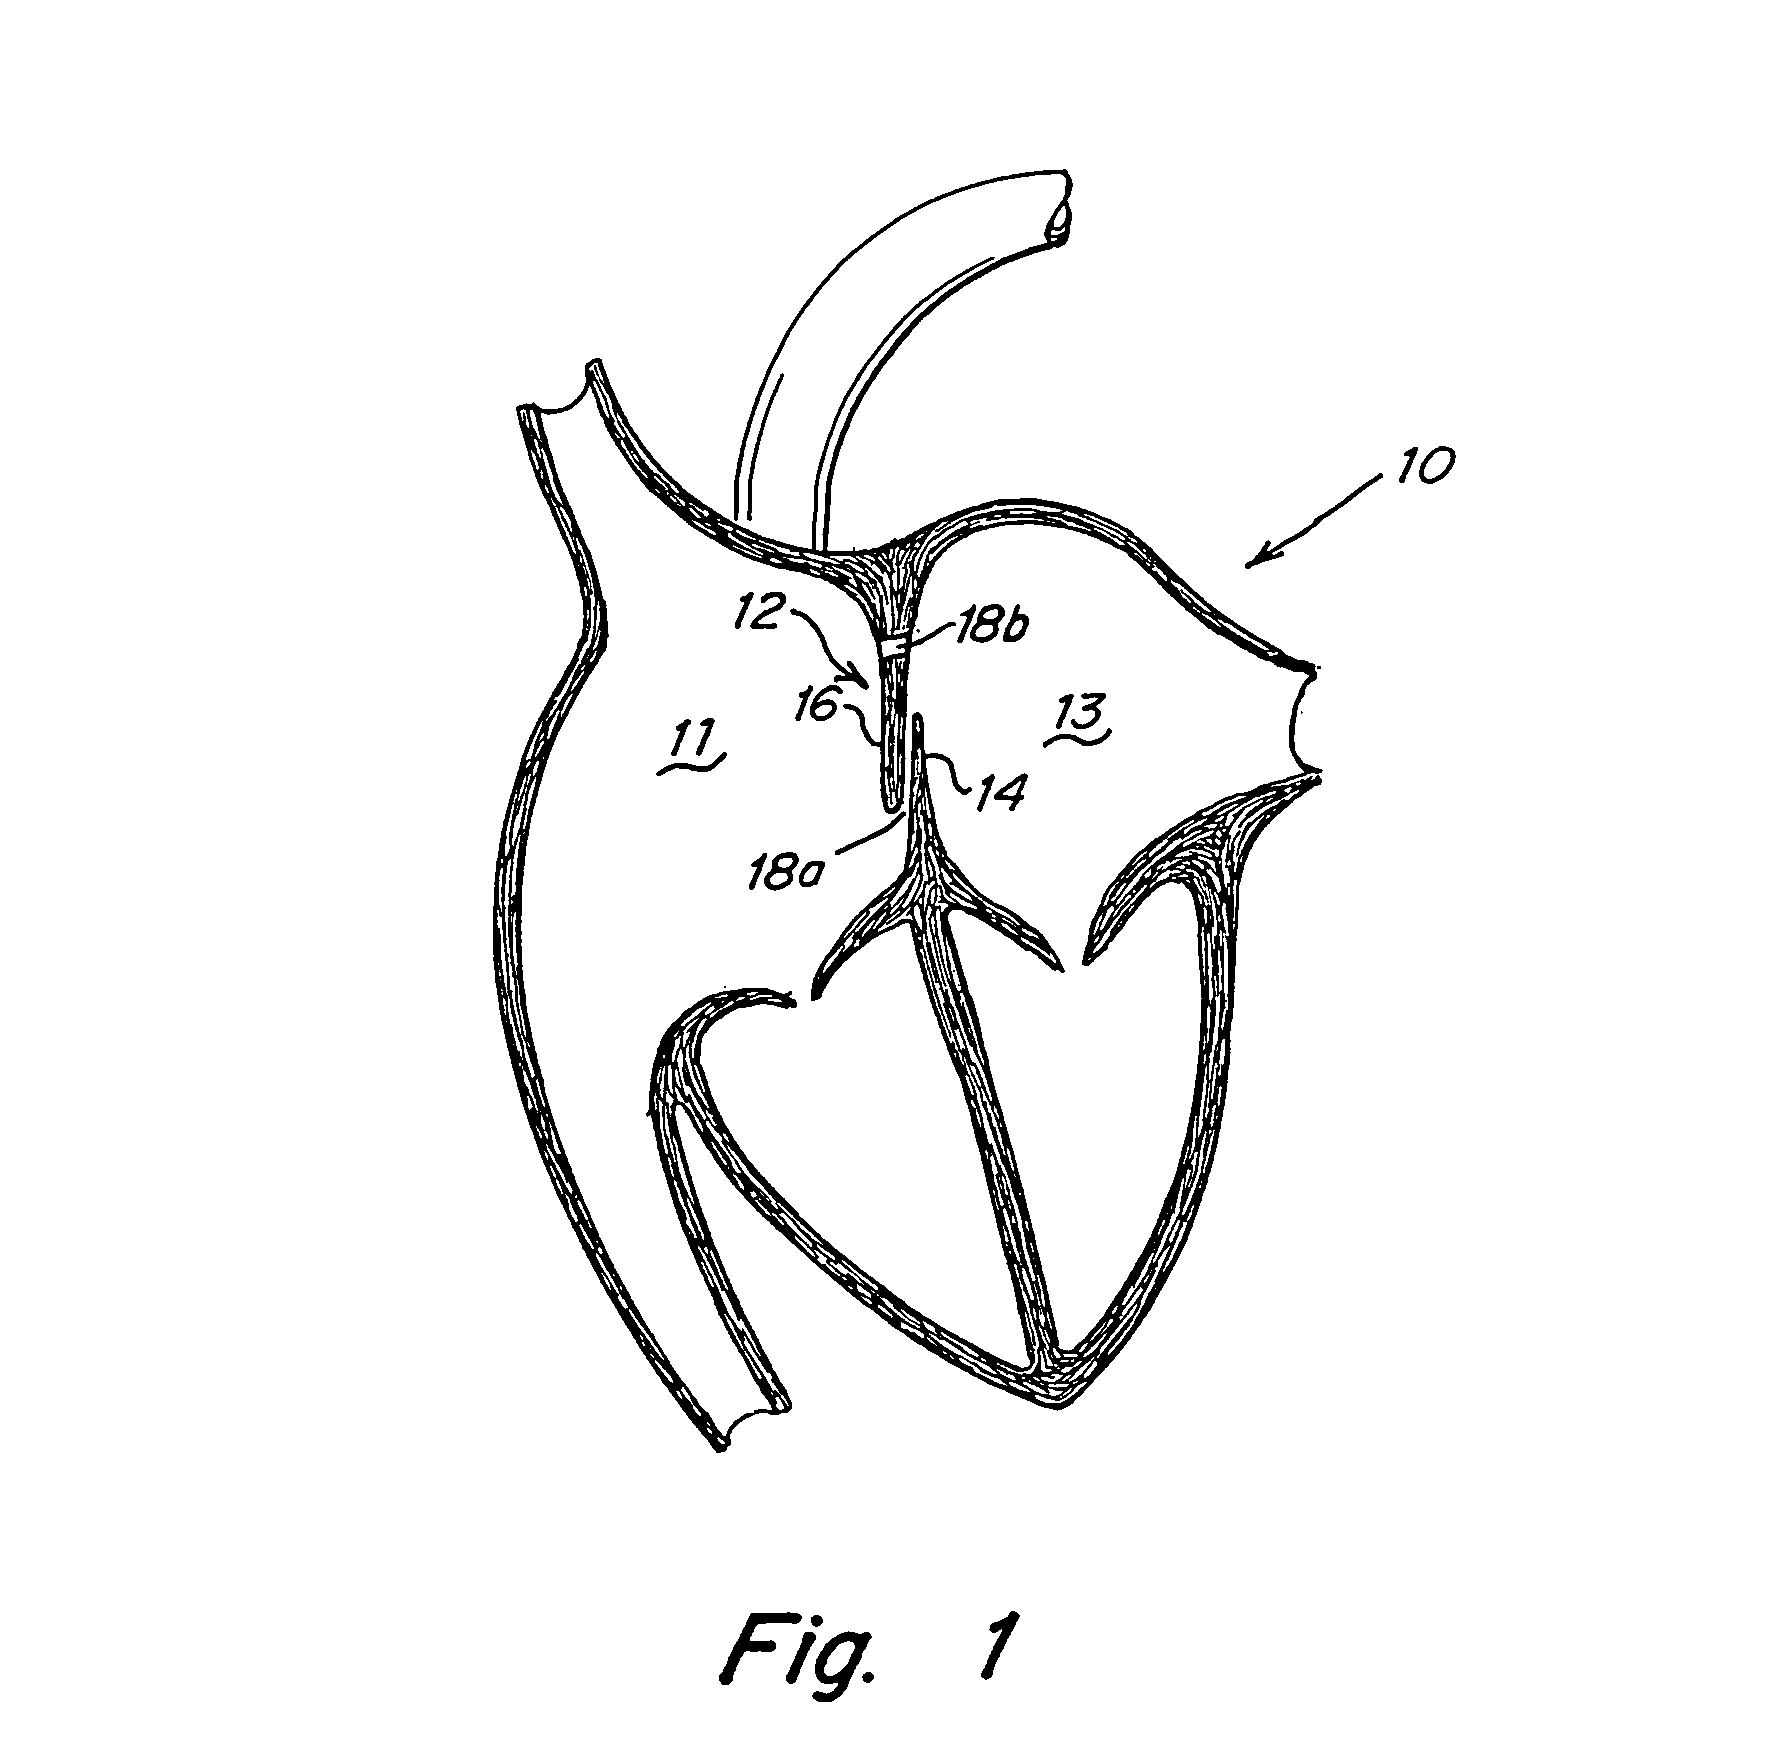 Tubular patent foramen ovale (PFO) closure device with catch system